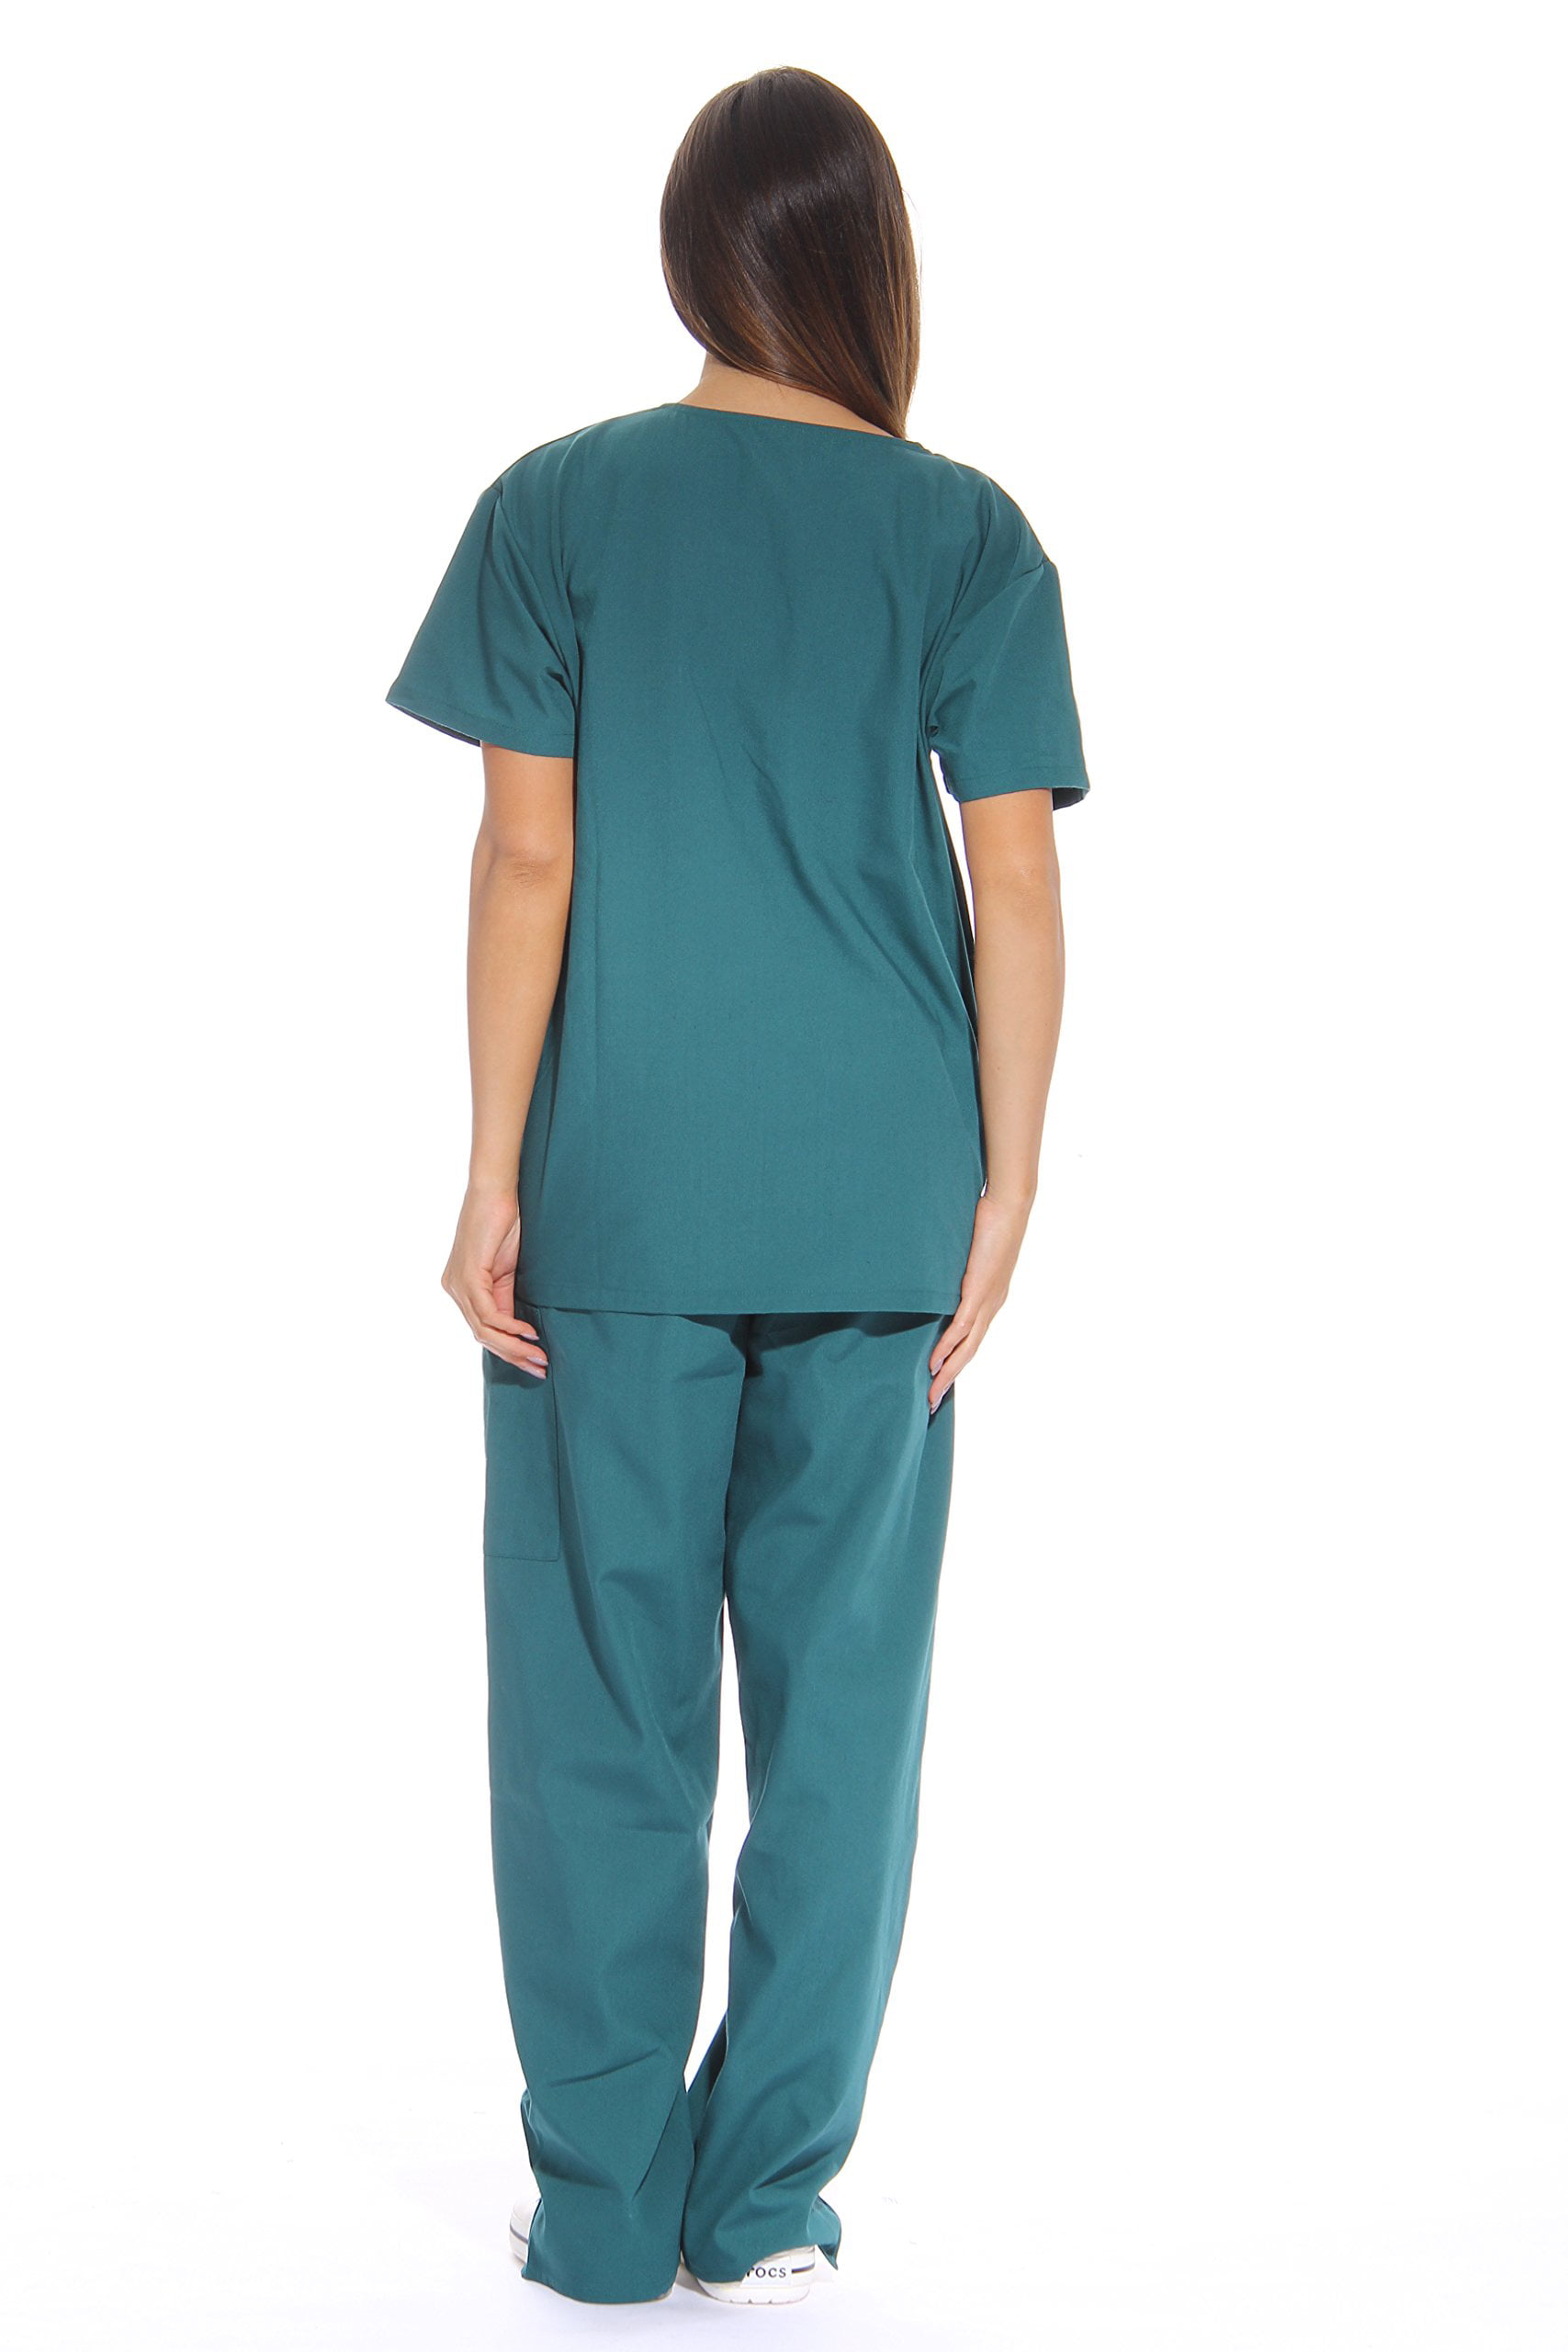 Just Love Women's Nursing Scrub Set - Six Pockets, V-Neck, Cargo